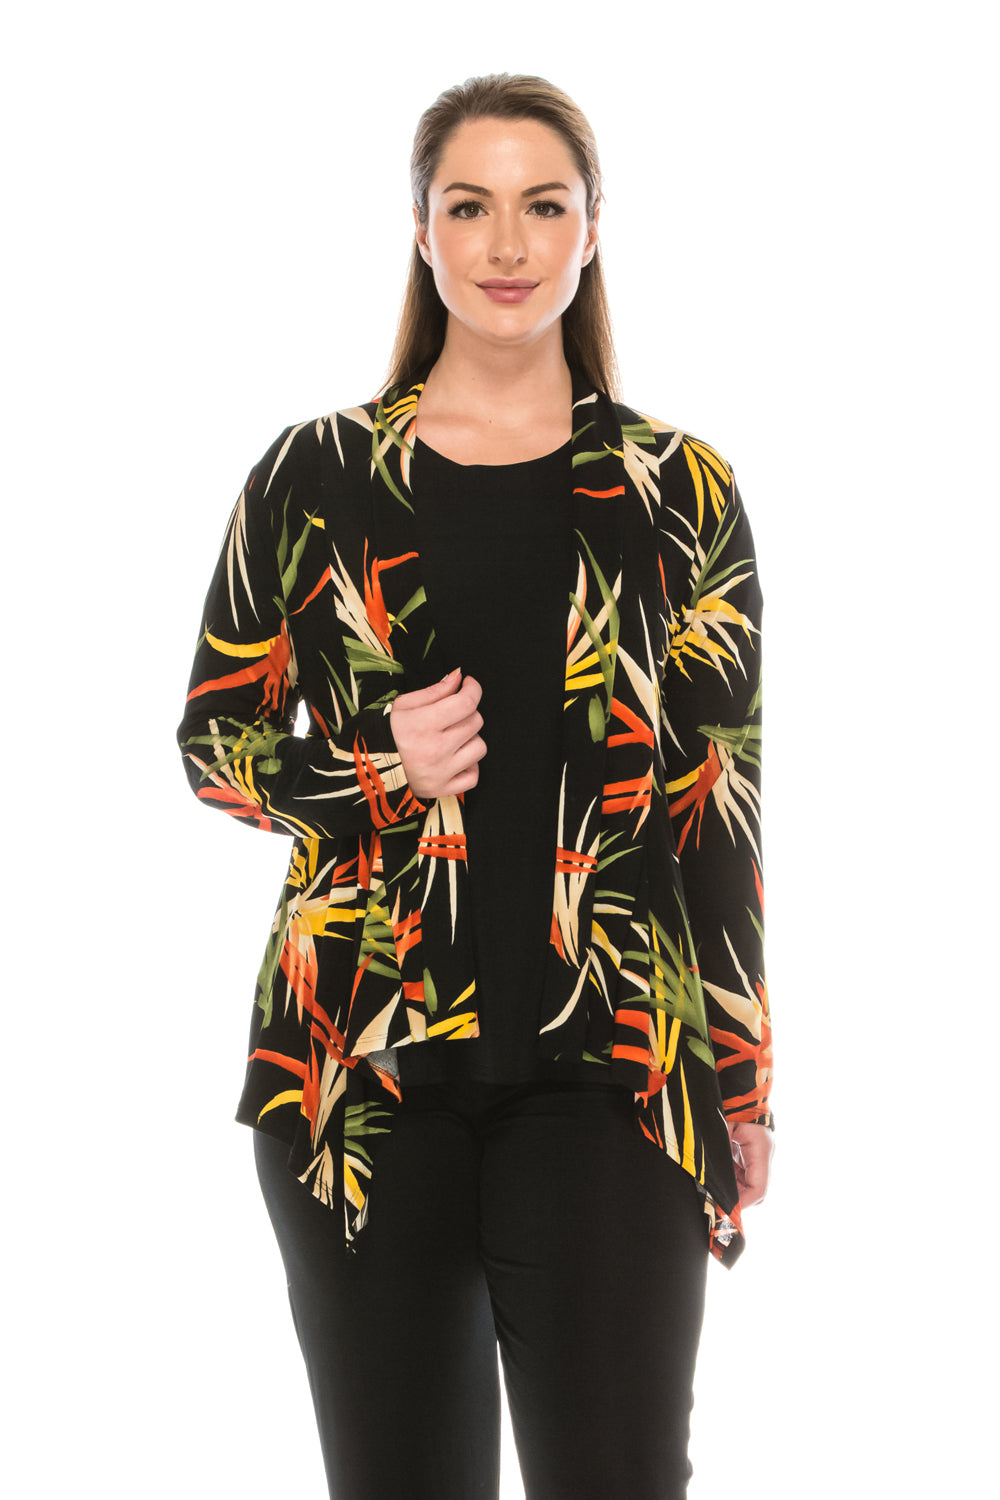 Jostar Women's Stretchy Print Mid Cut Jacket Long Sleeve Print, 428BN-LP-W679 - Jostar Online